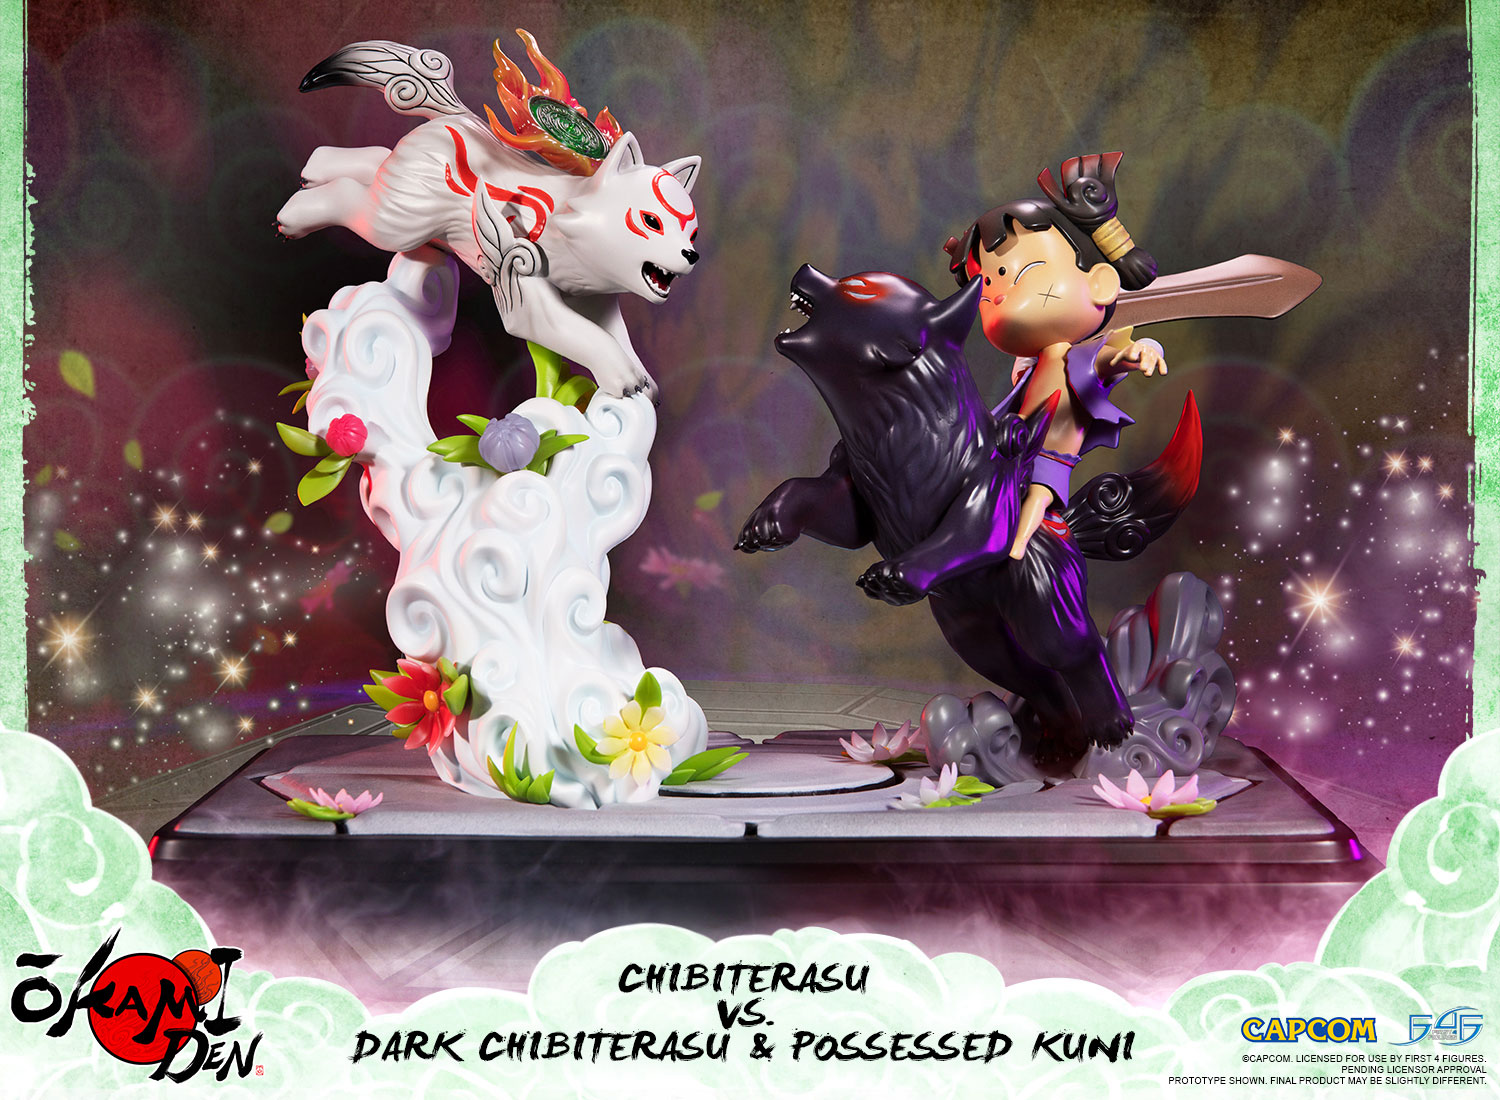 Chibiterasu vs. Dark Chibiterasu & Possessed Kuni (Standard Edition)